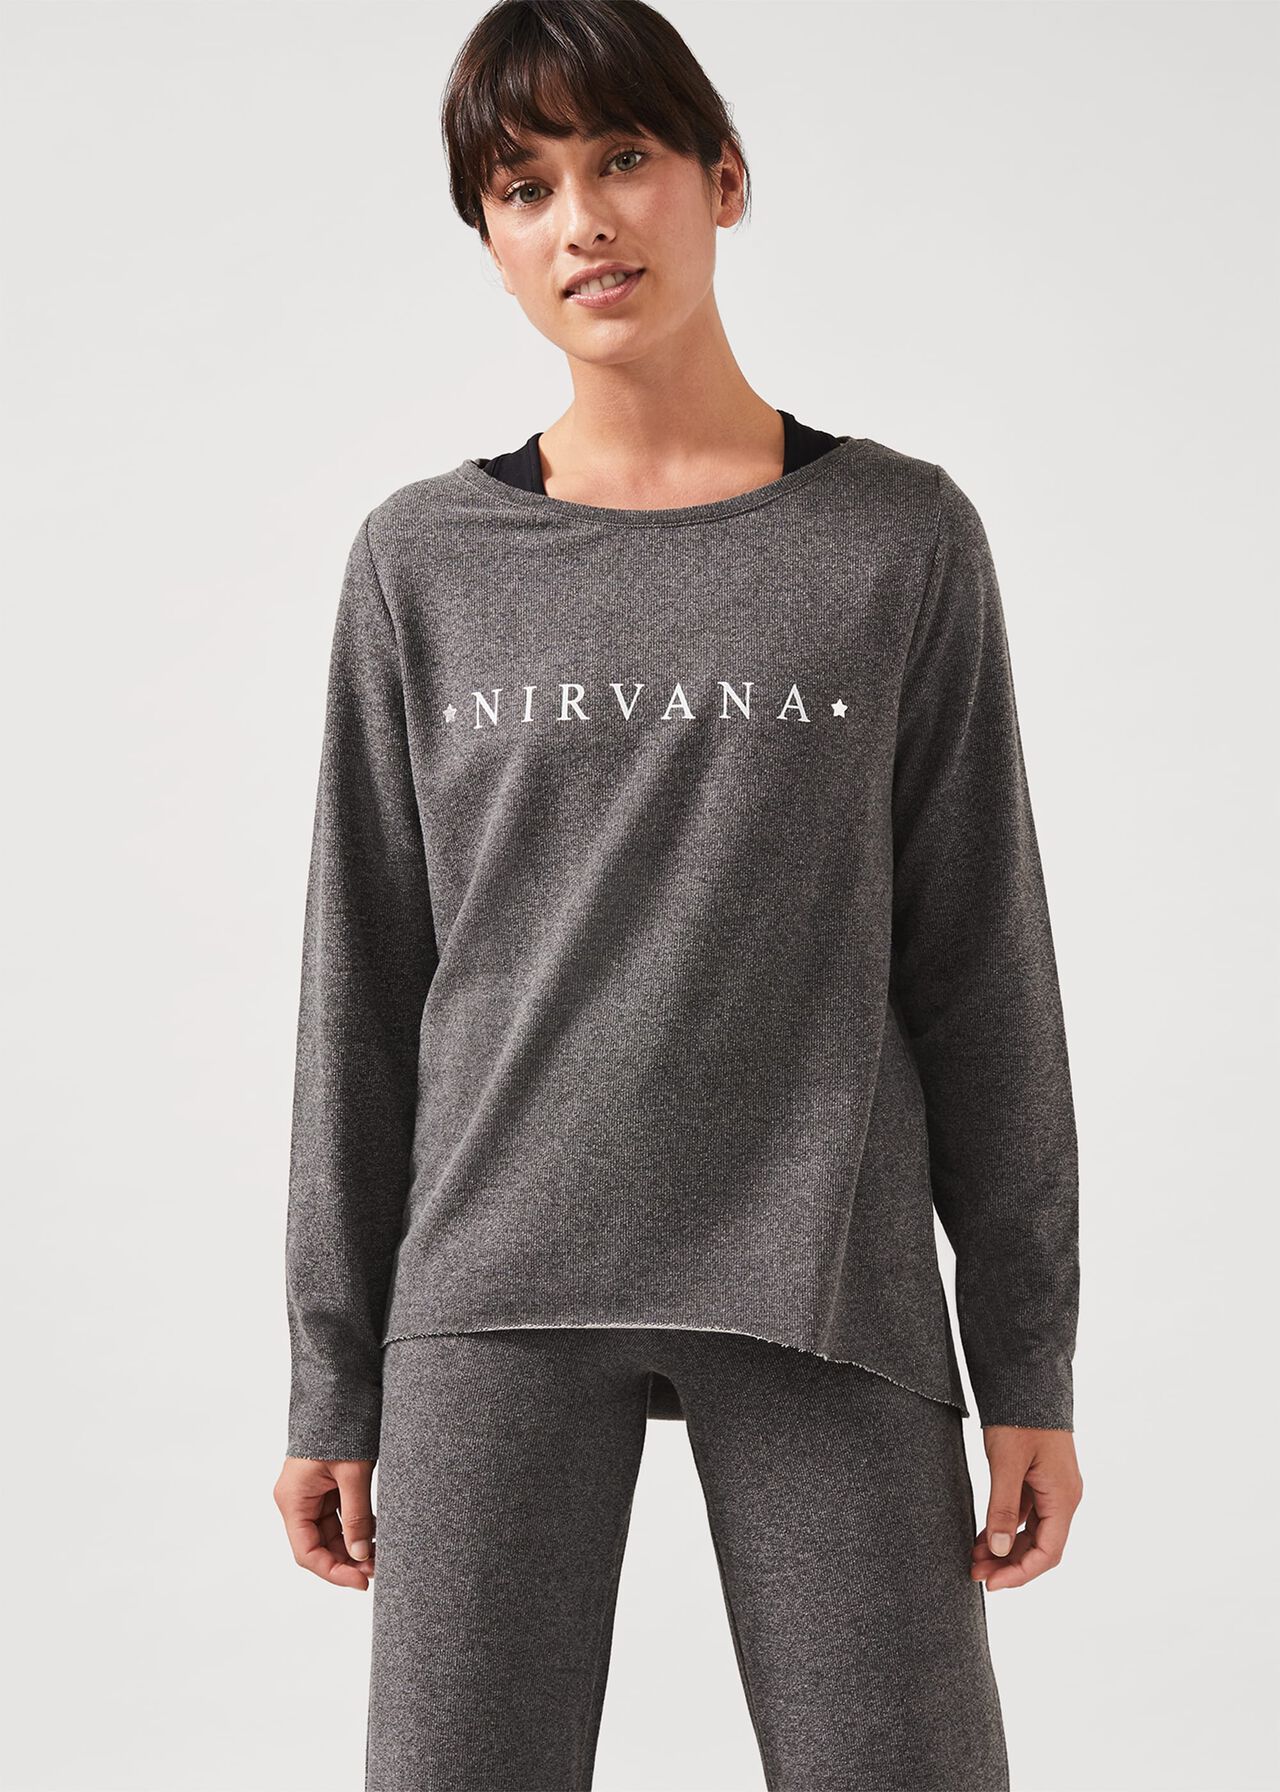 Nirvana Sweat Top